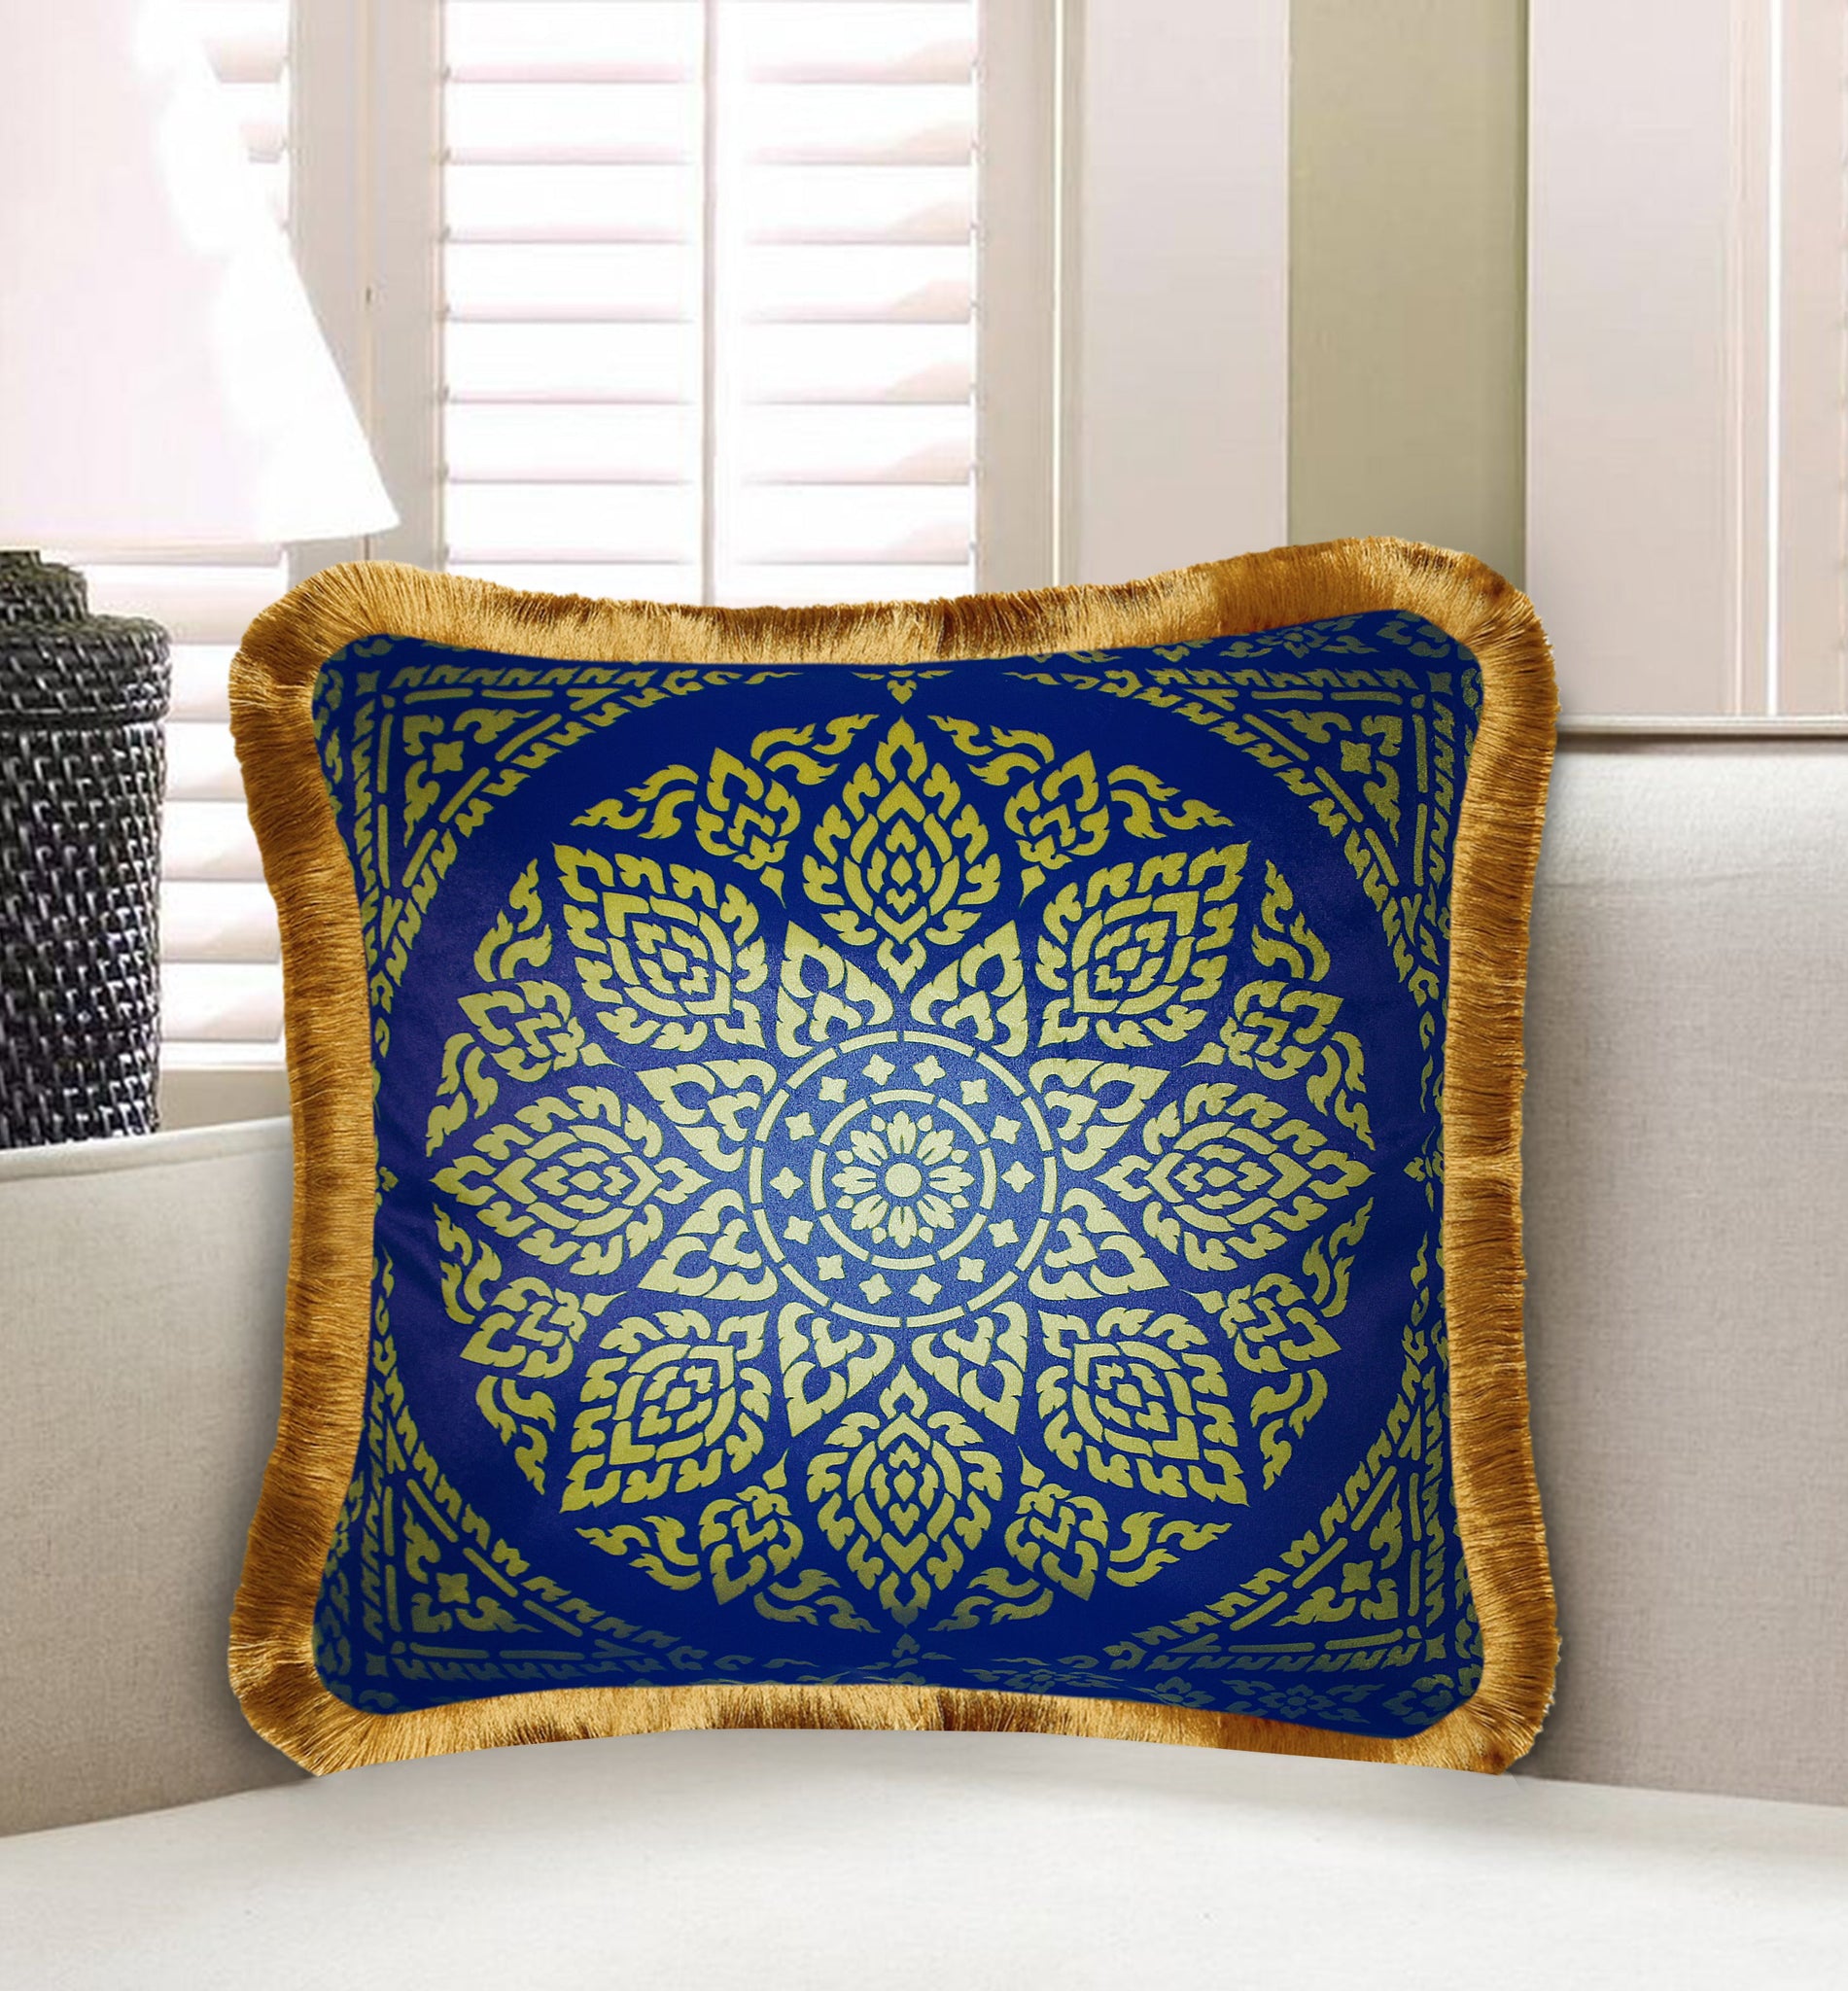 Blue Velvet Cushion Cover Arabesque Floral Decorative Pillowcase Classic Home Decor Throw Pillow for Sofa Chair Living Room 45x45 cm 18x18 In